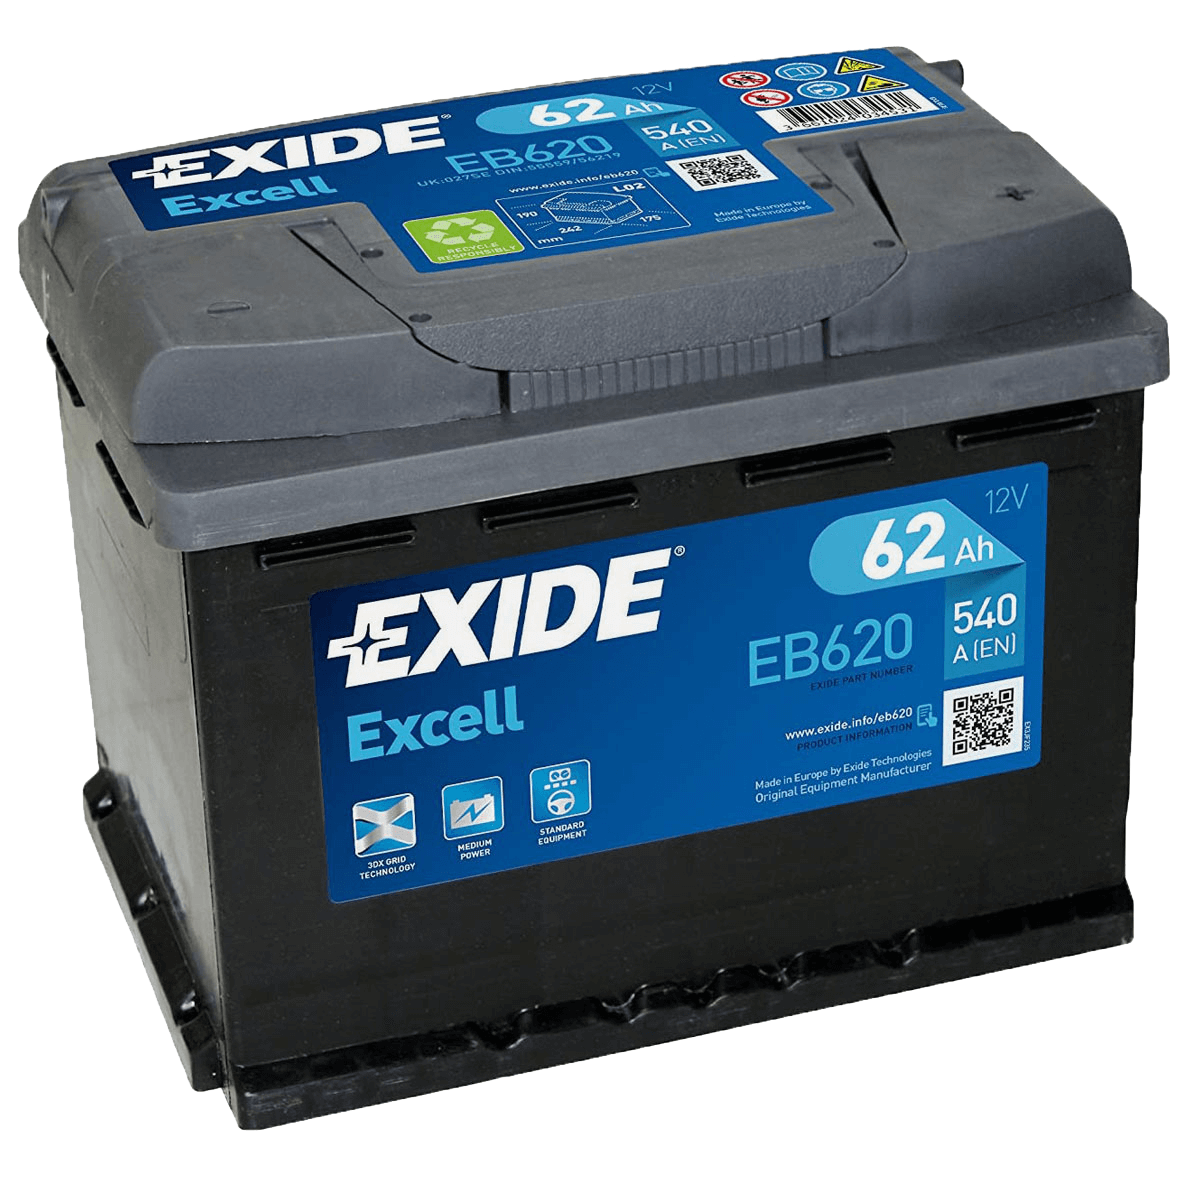 Exide EB620 Excell 12V 62Ah 540A Autobatterie, Starterbatterie, Boot, Batterien für